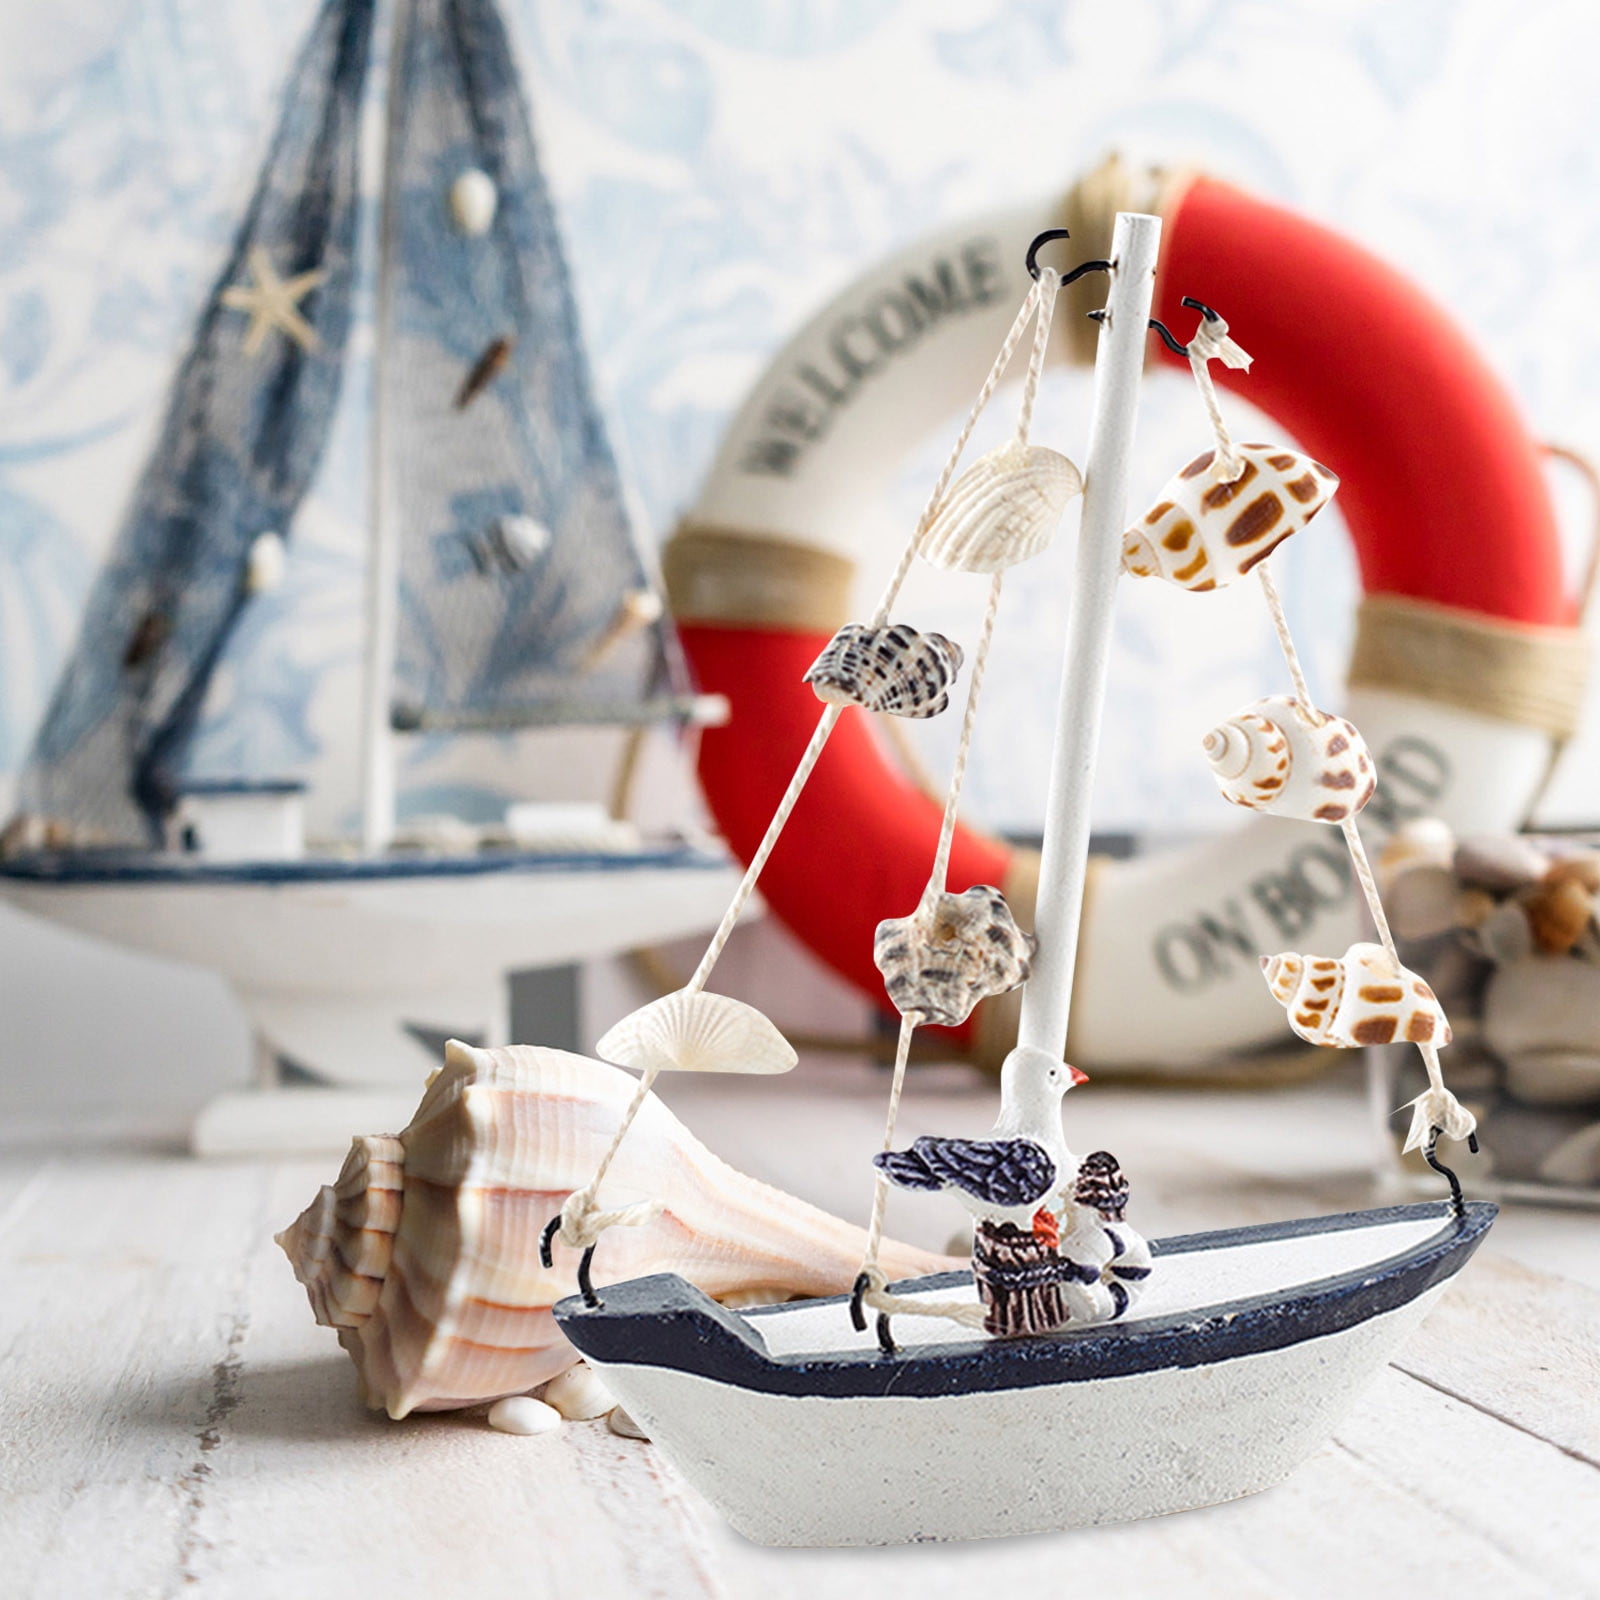 Wooden Sailboat Model Decoration, Mini Wood Sailing Boat Ship Model  Handmade Rustic Vintage Beach Nautical Ocean Theme Sail Boat Decor (13.43  Inch)